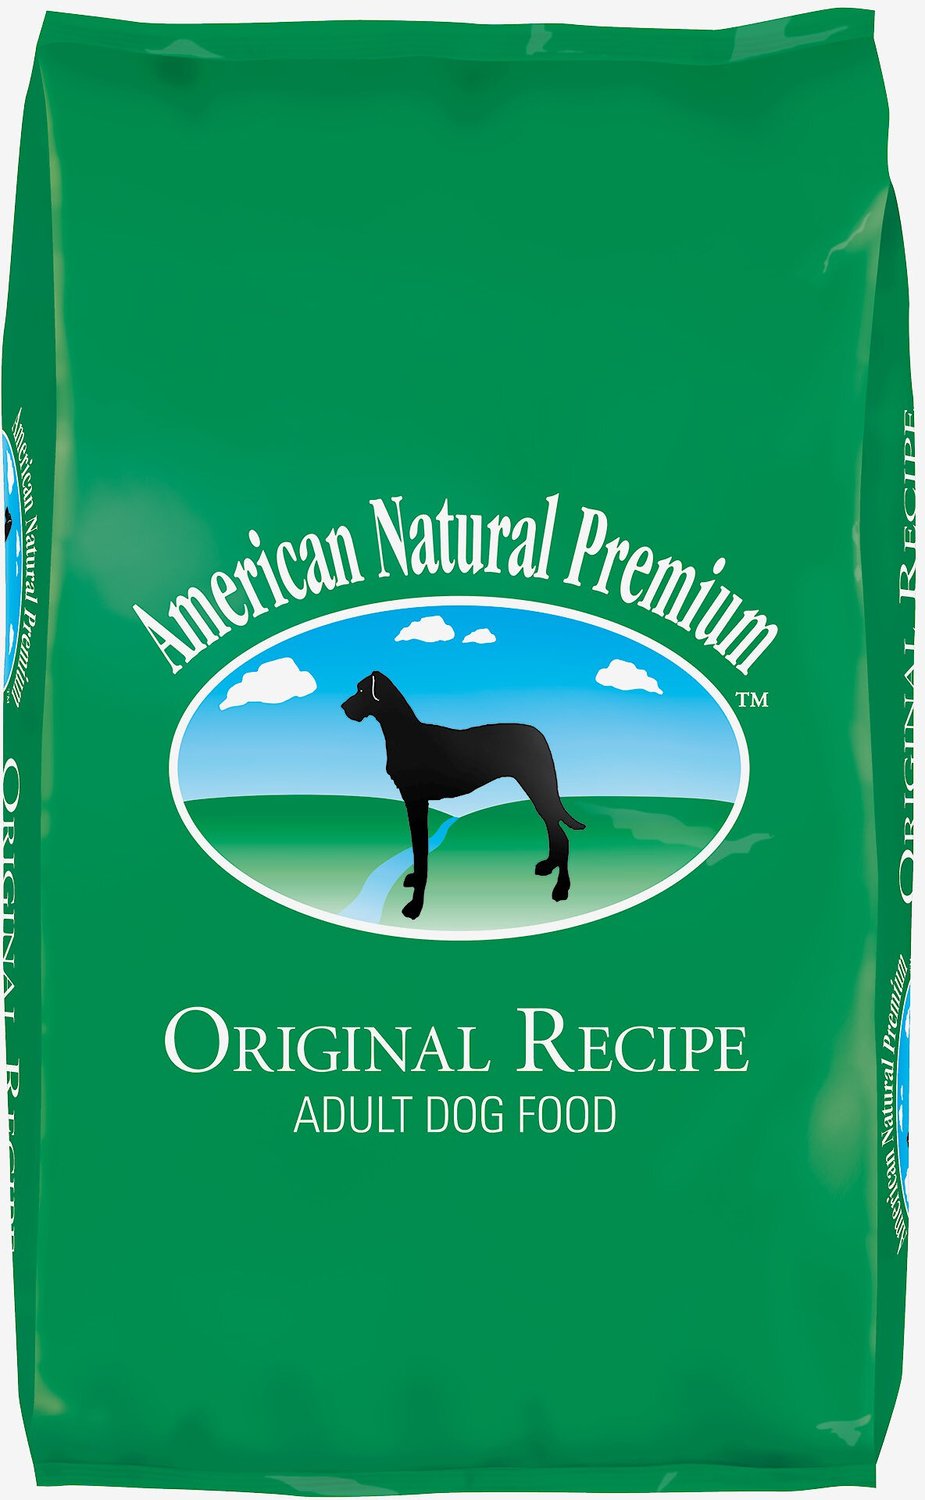 Image result for american natural premium dog food